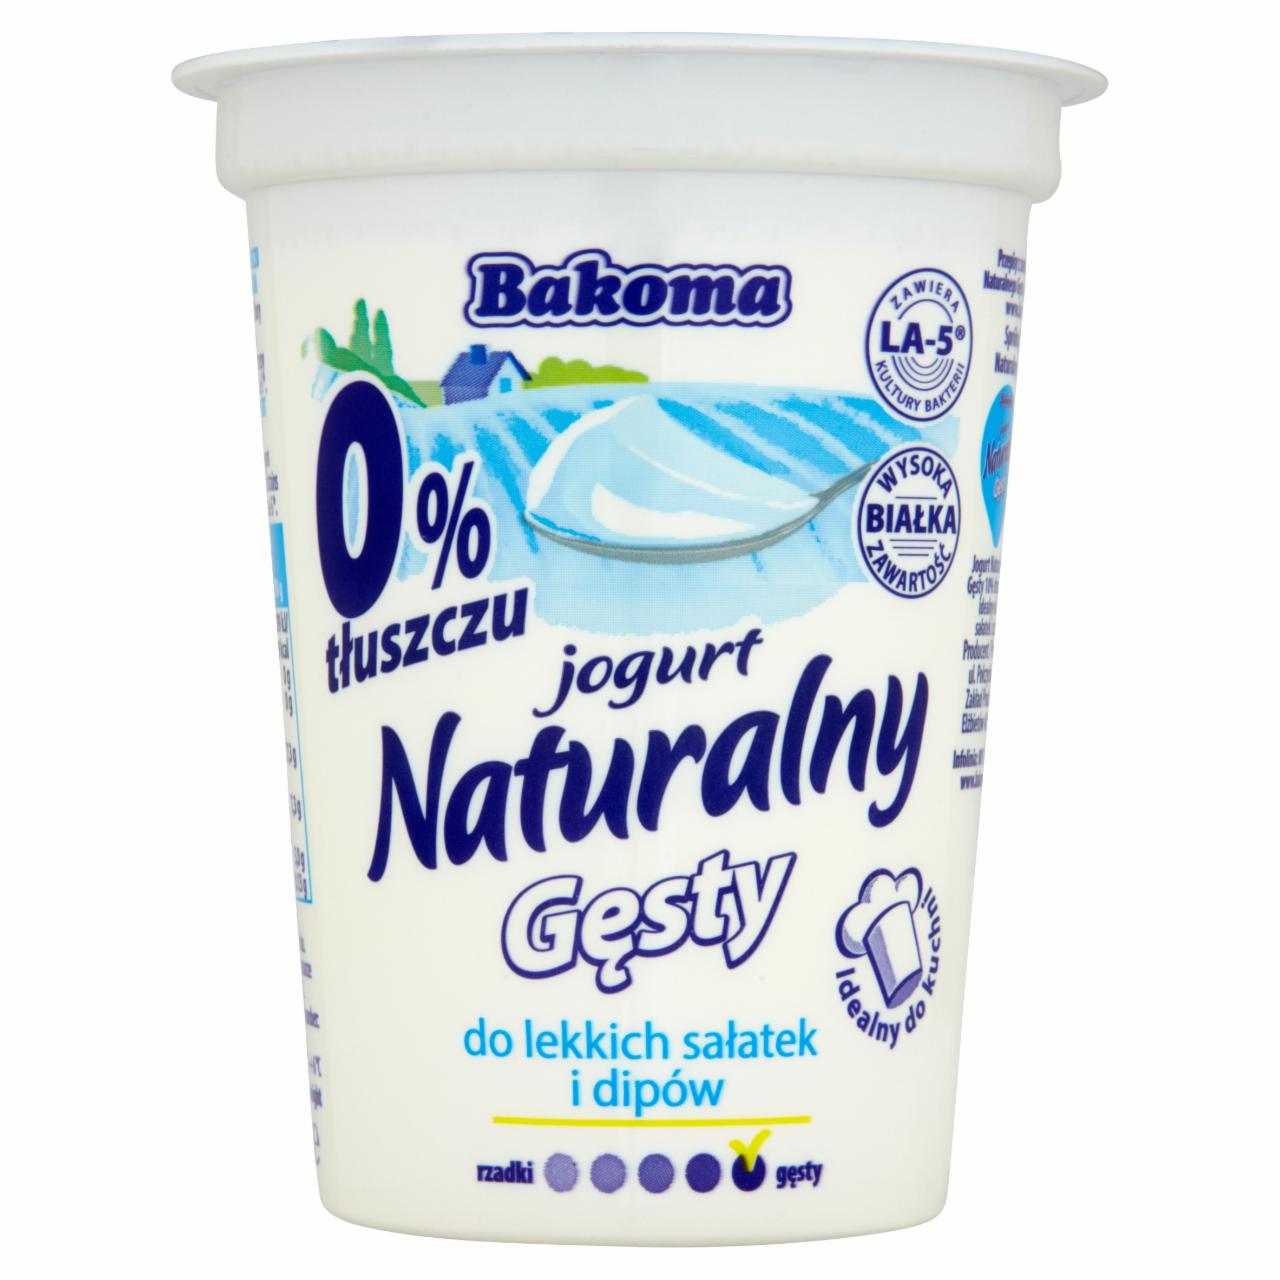 Zdjęcia - Bakoma Jogurt naturalny gęsty 0% 390 g